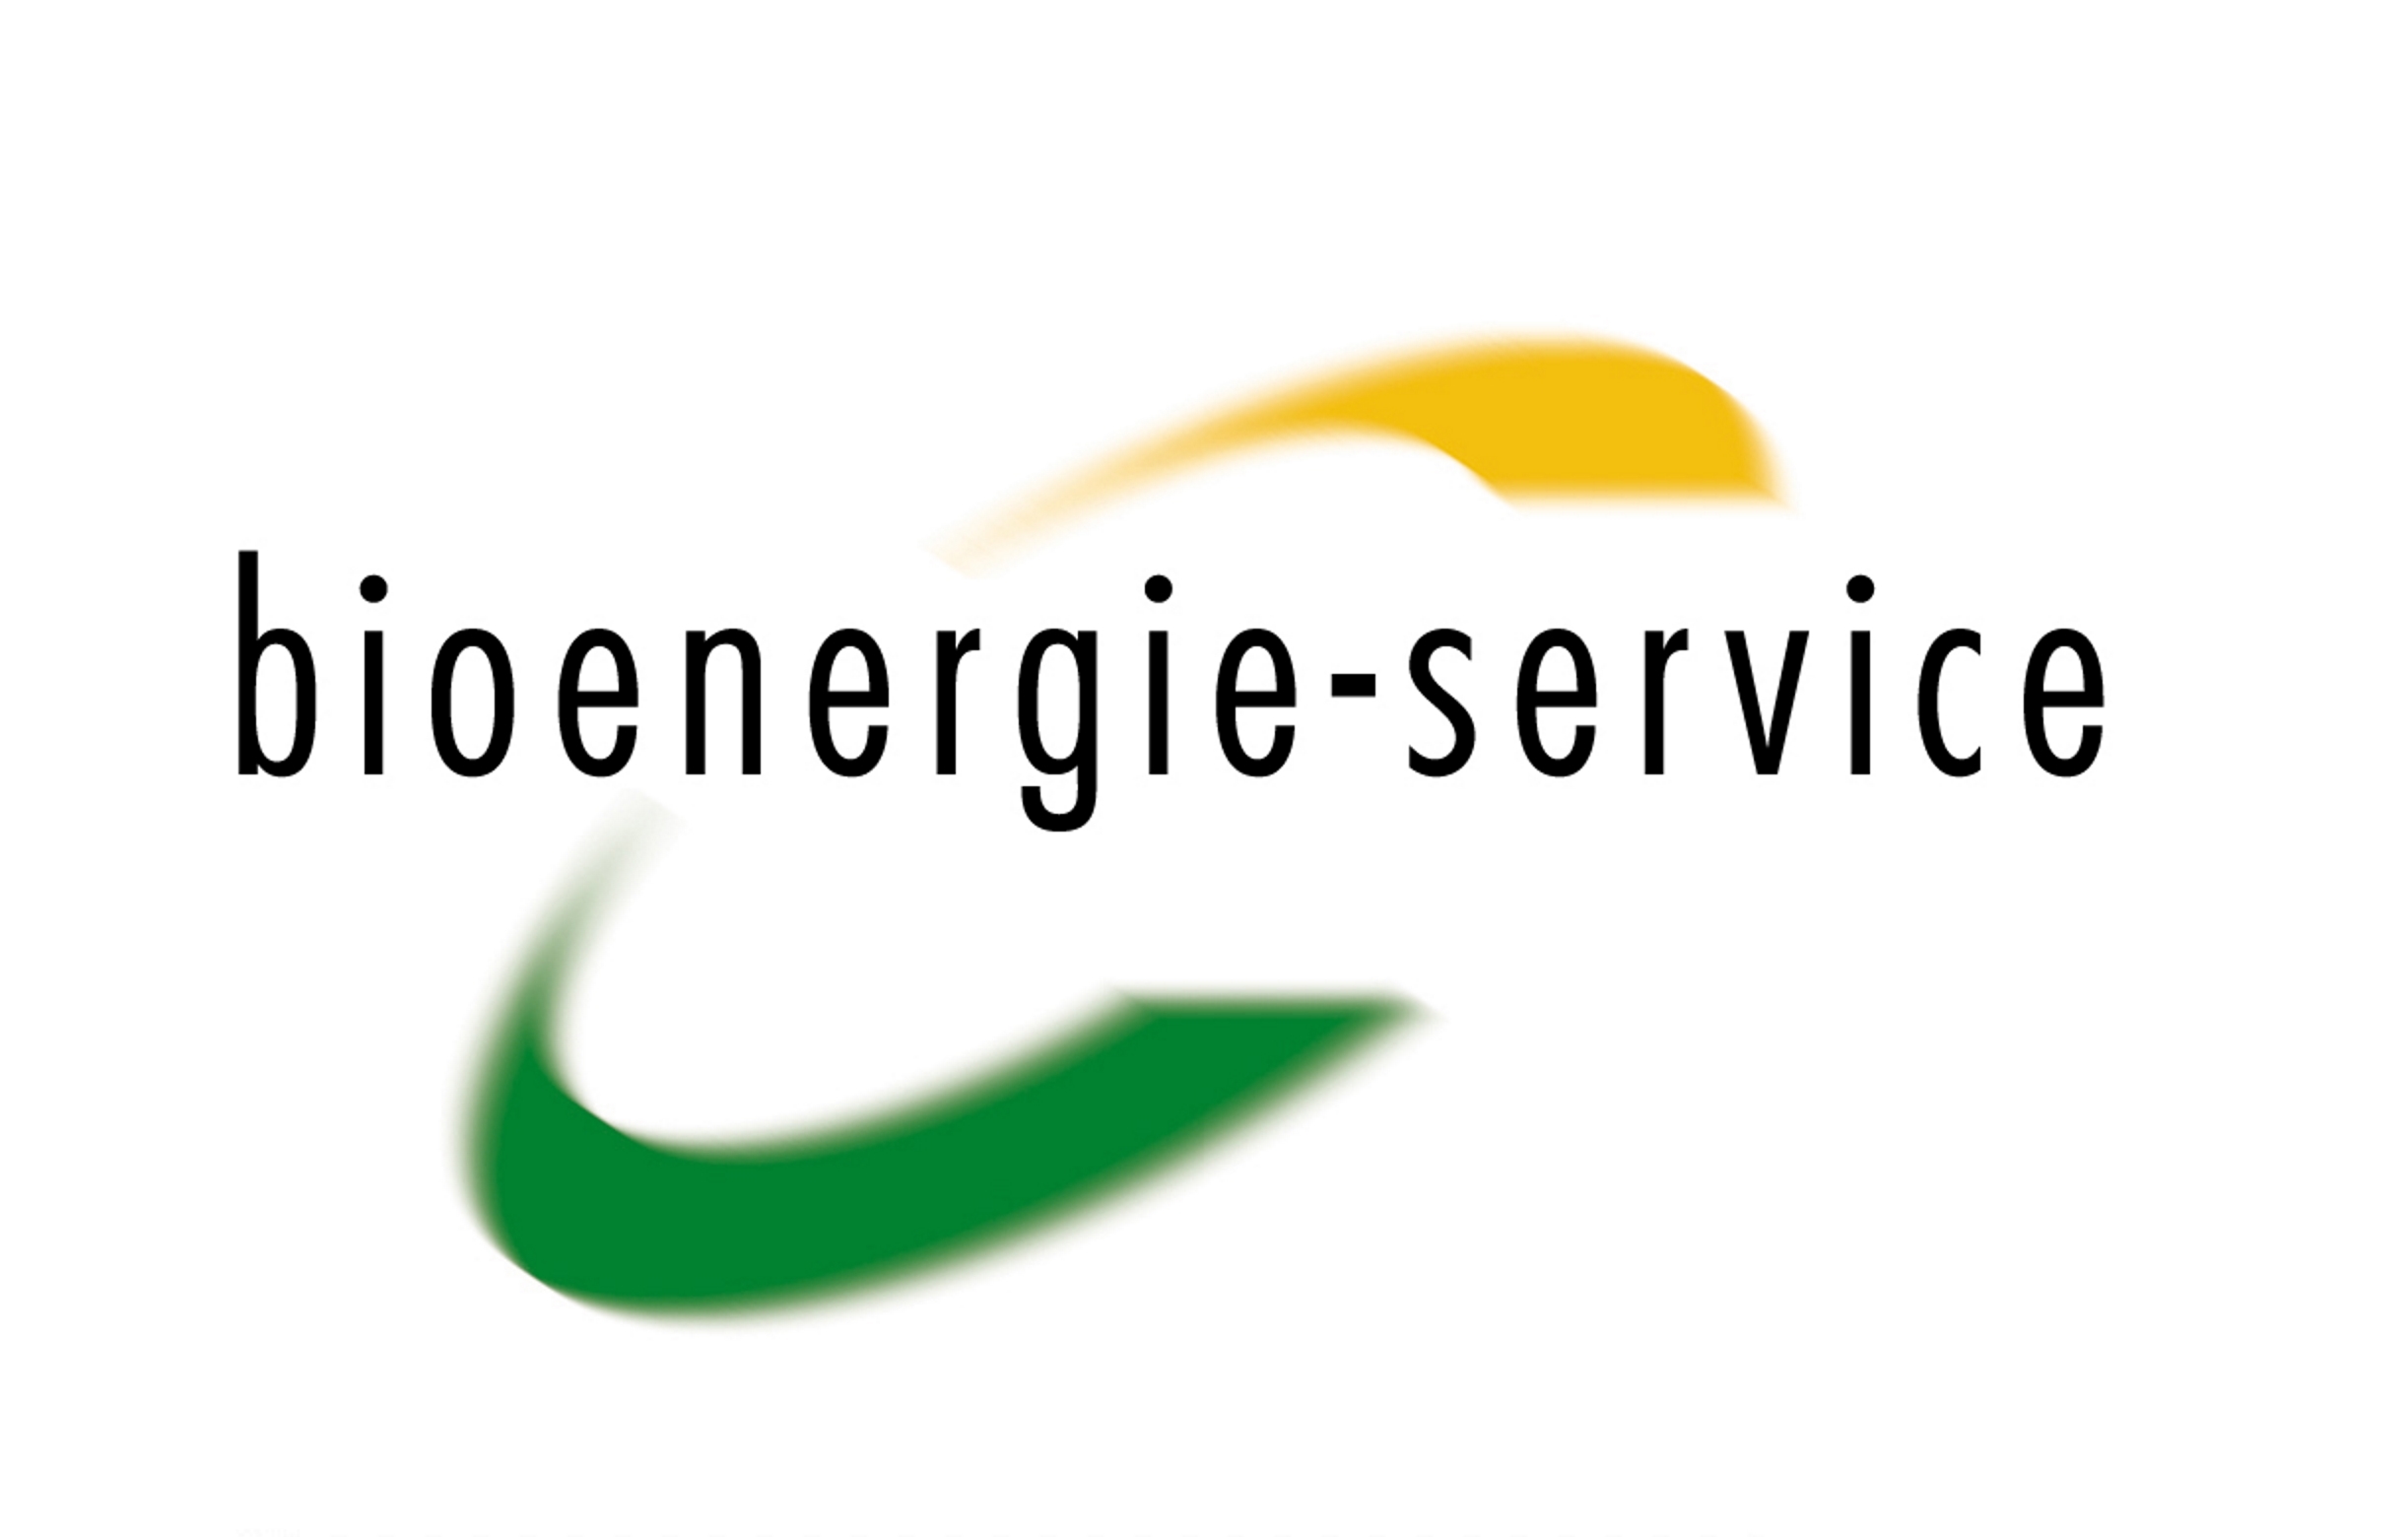 (c) Bioenergie-service.at